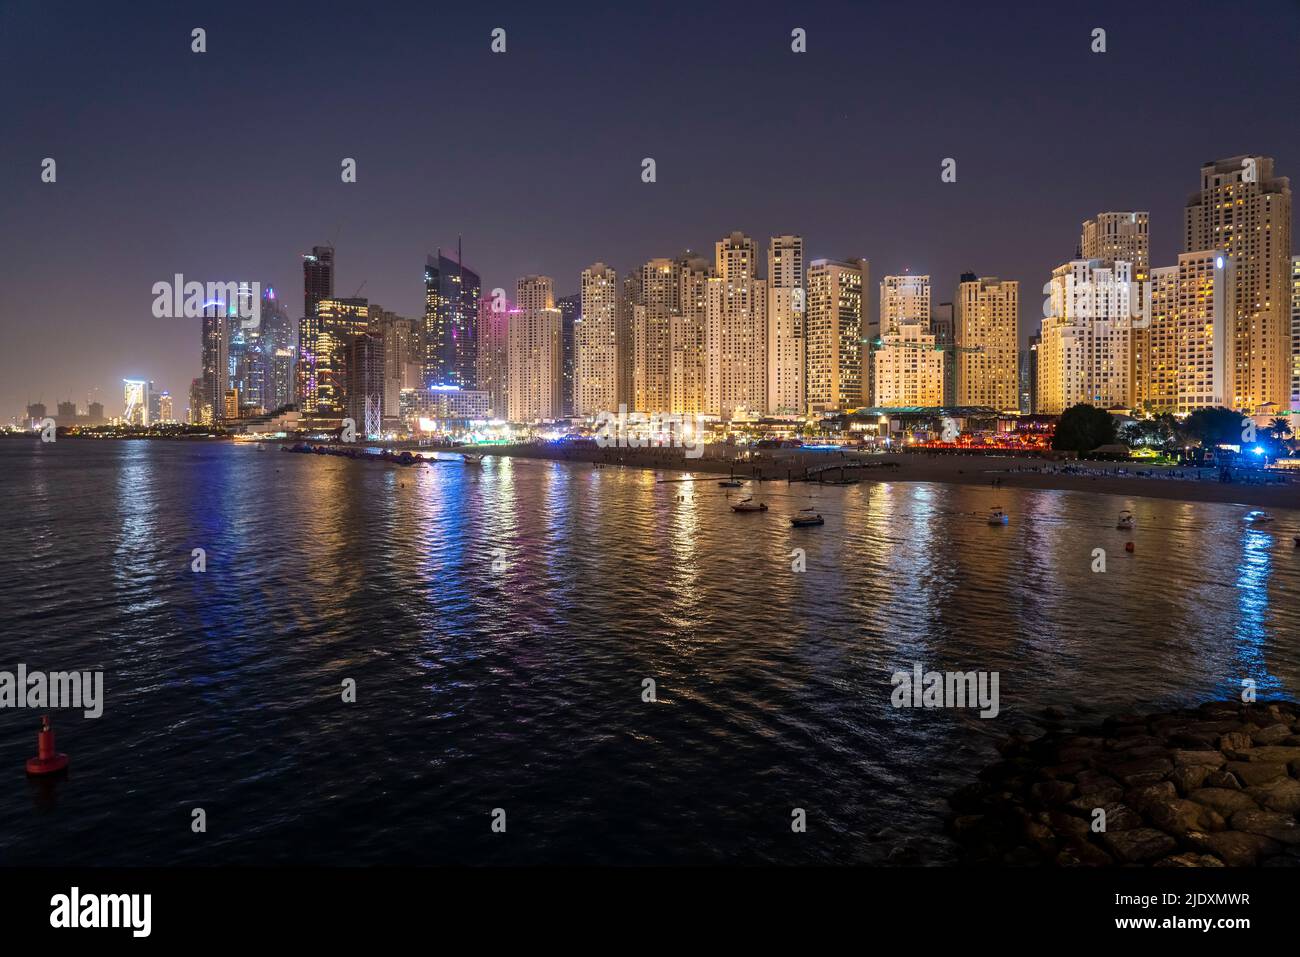 Emiratos Árabes Unidos, Dubai, Skyline de apartamentos costeros iluminados por la noche Foto de stock